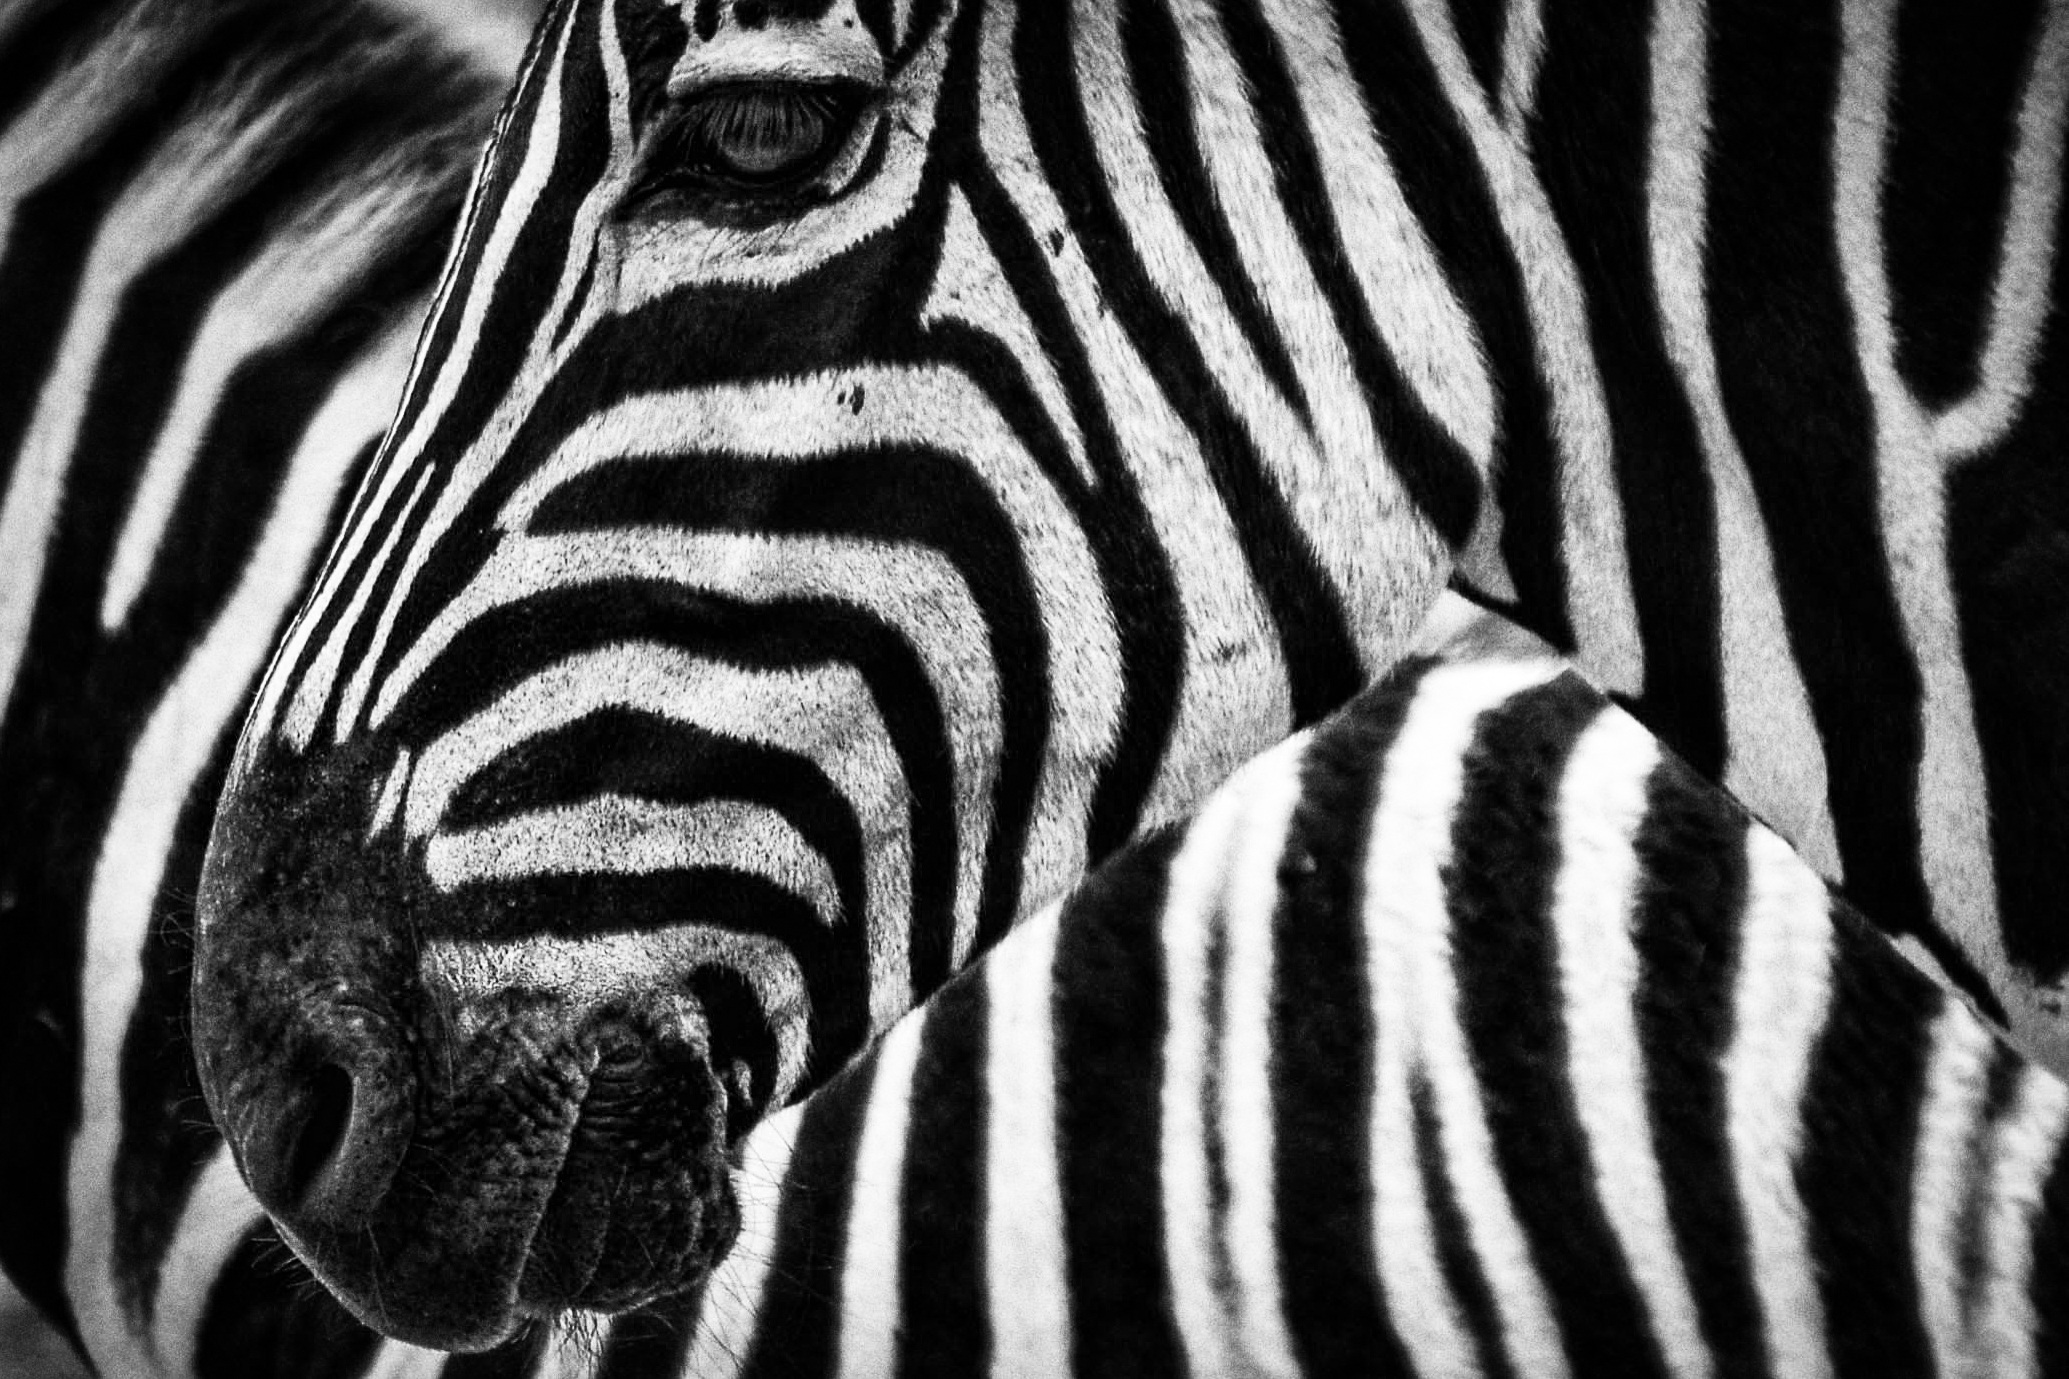 zebra wallpaper tumblr